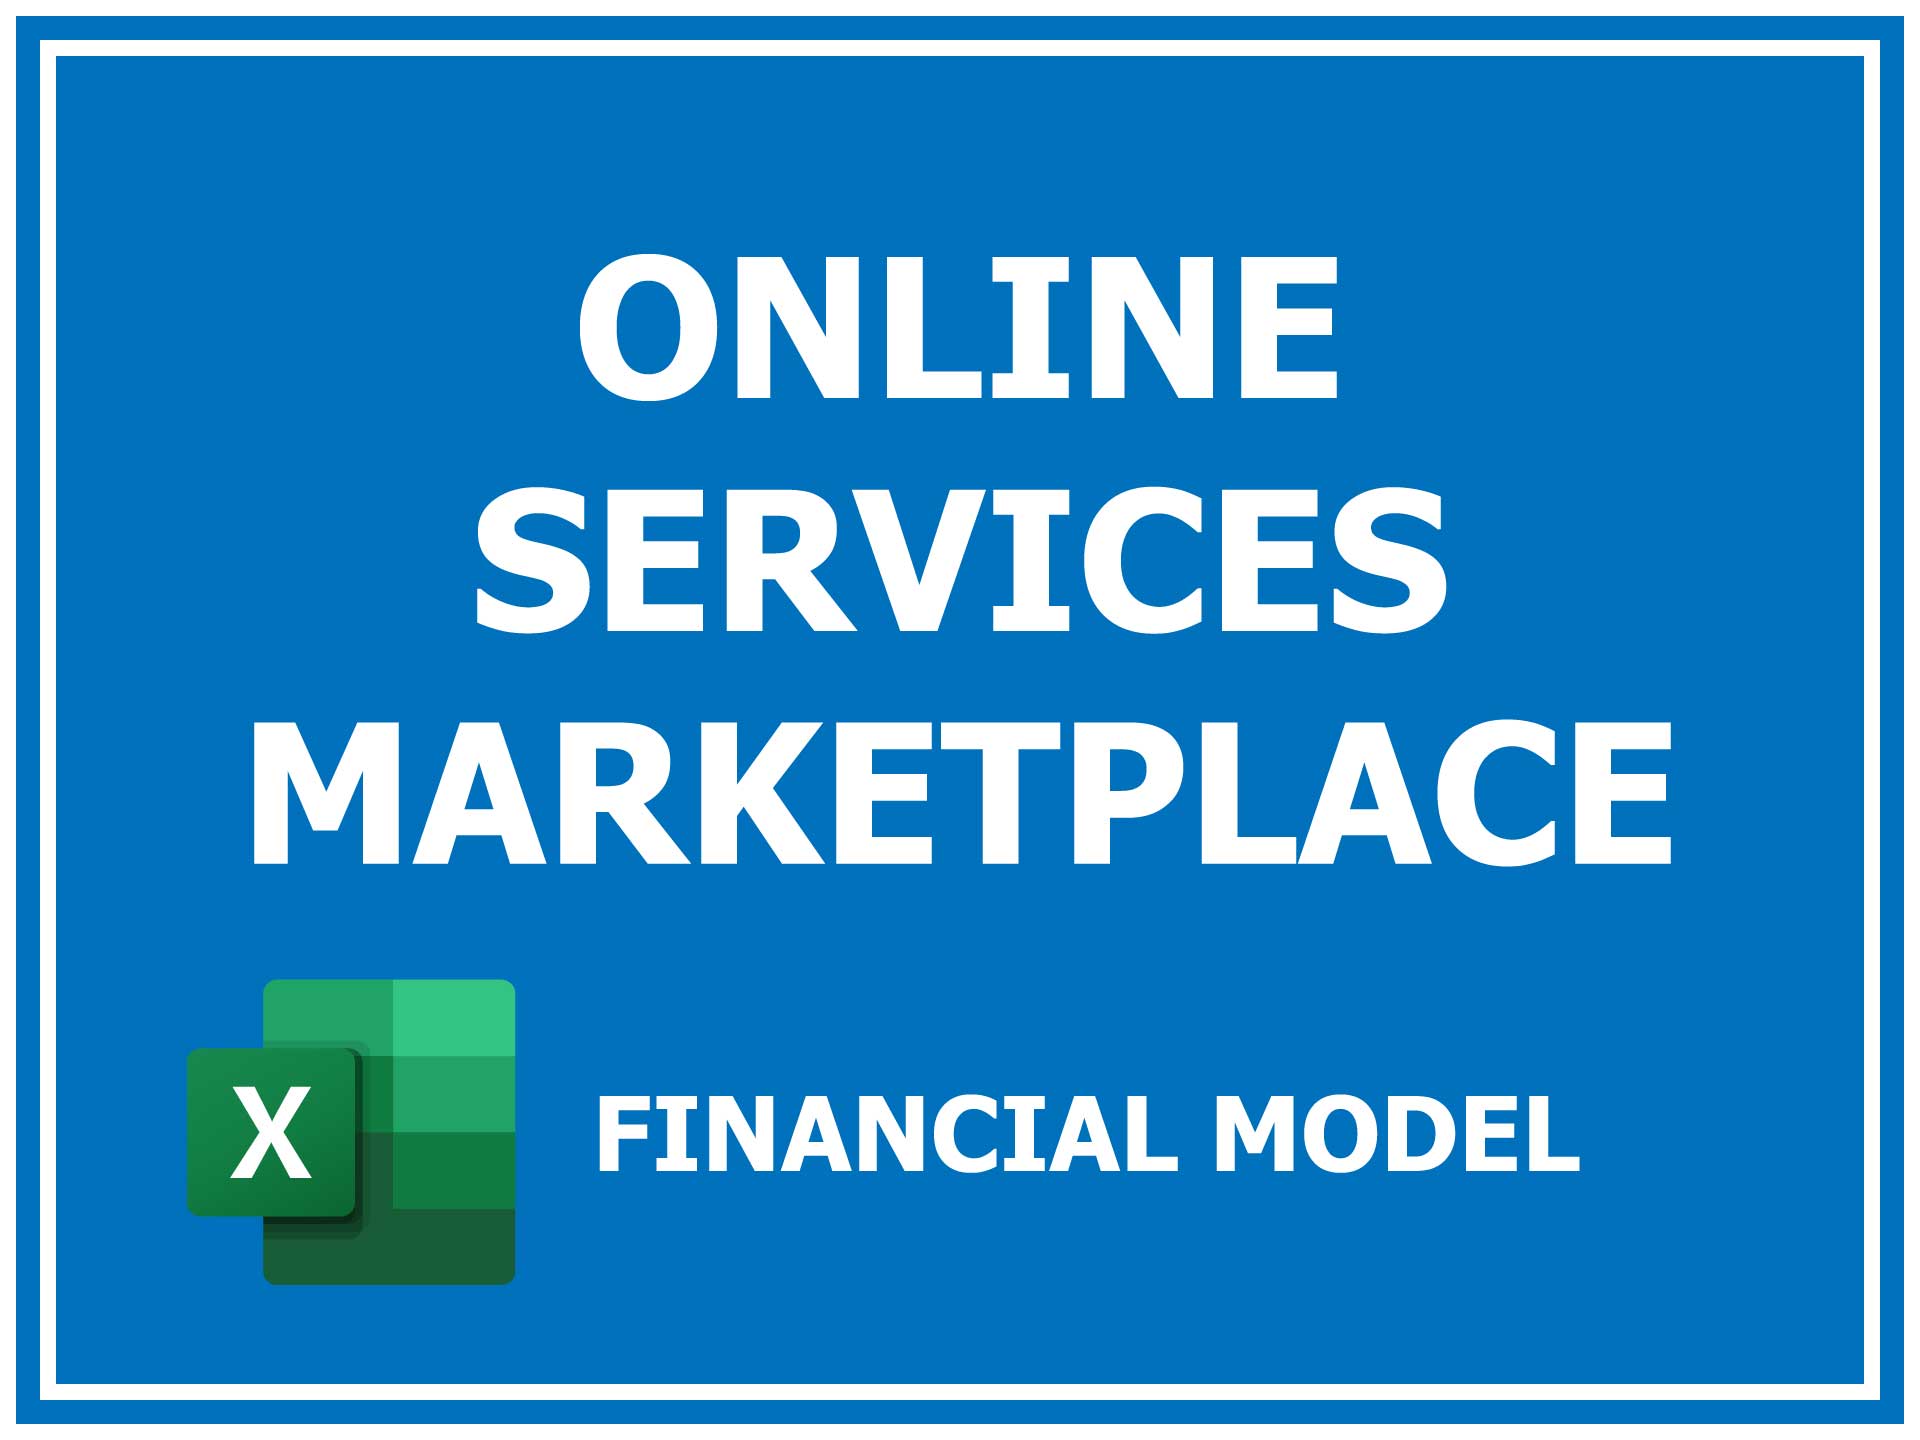 Online Services Marketplace